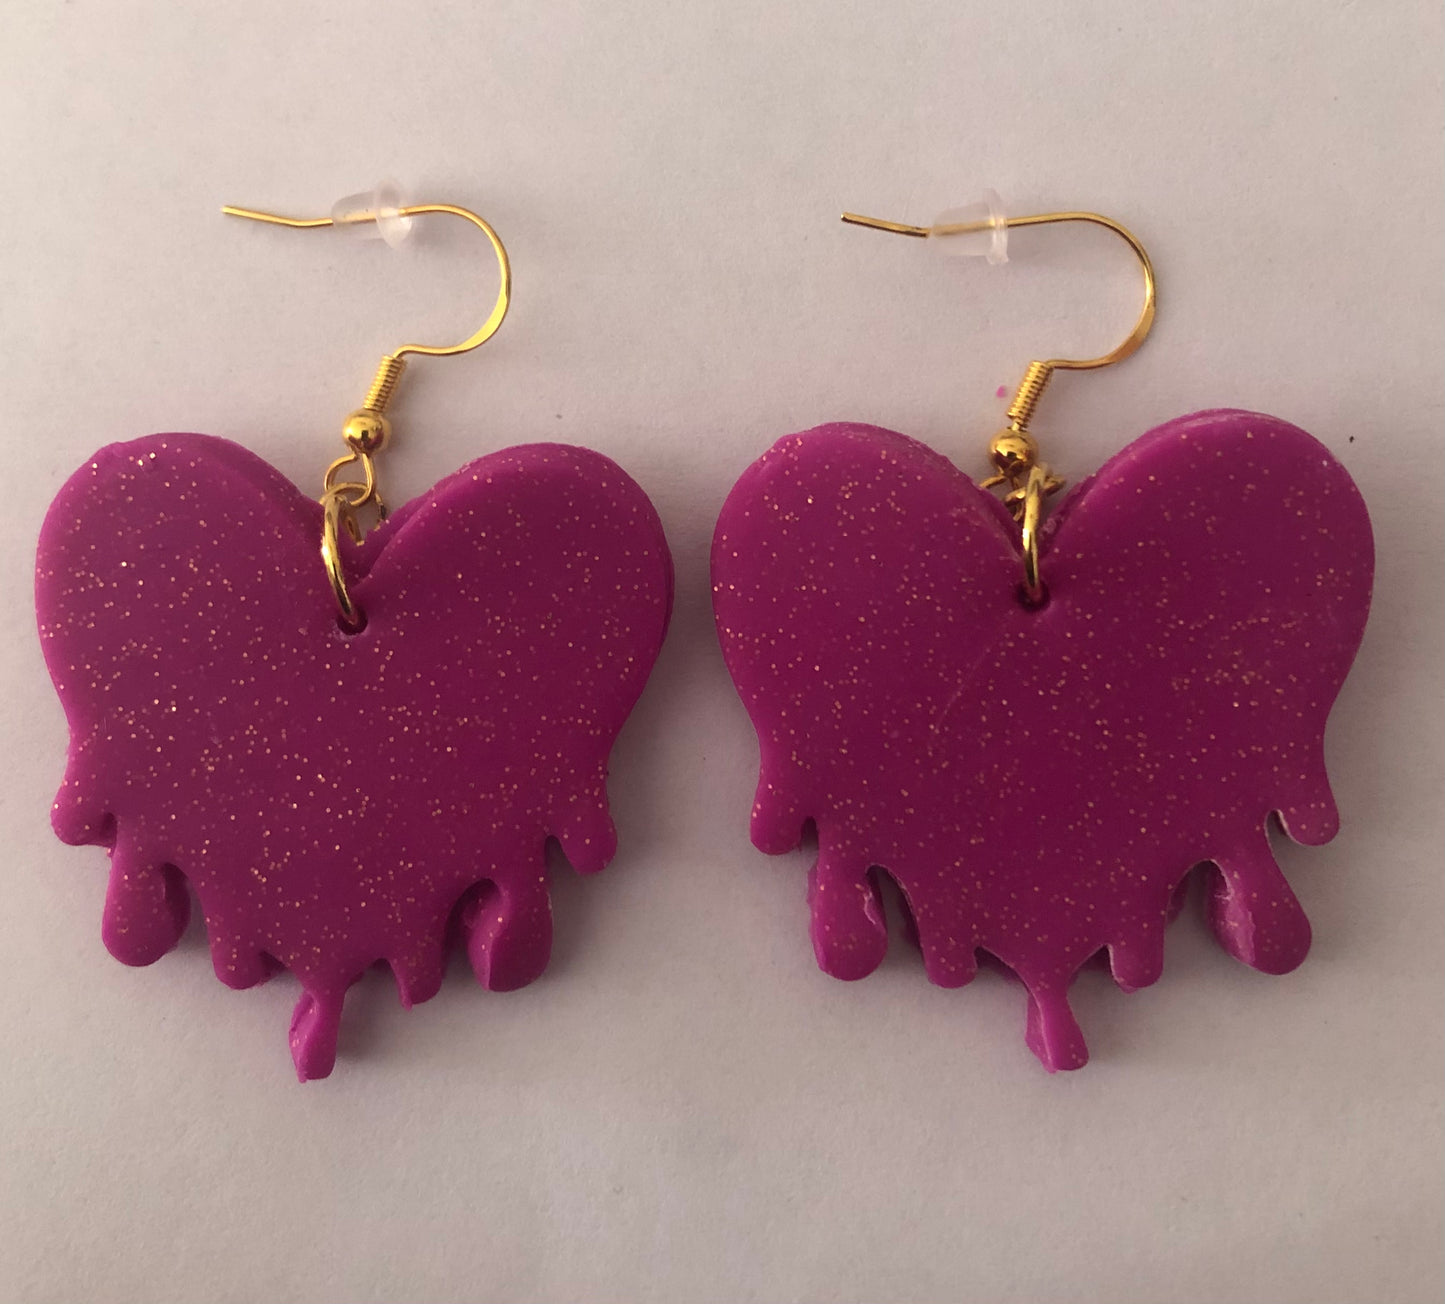 Heart-shaped polymer clay earrings